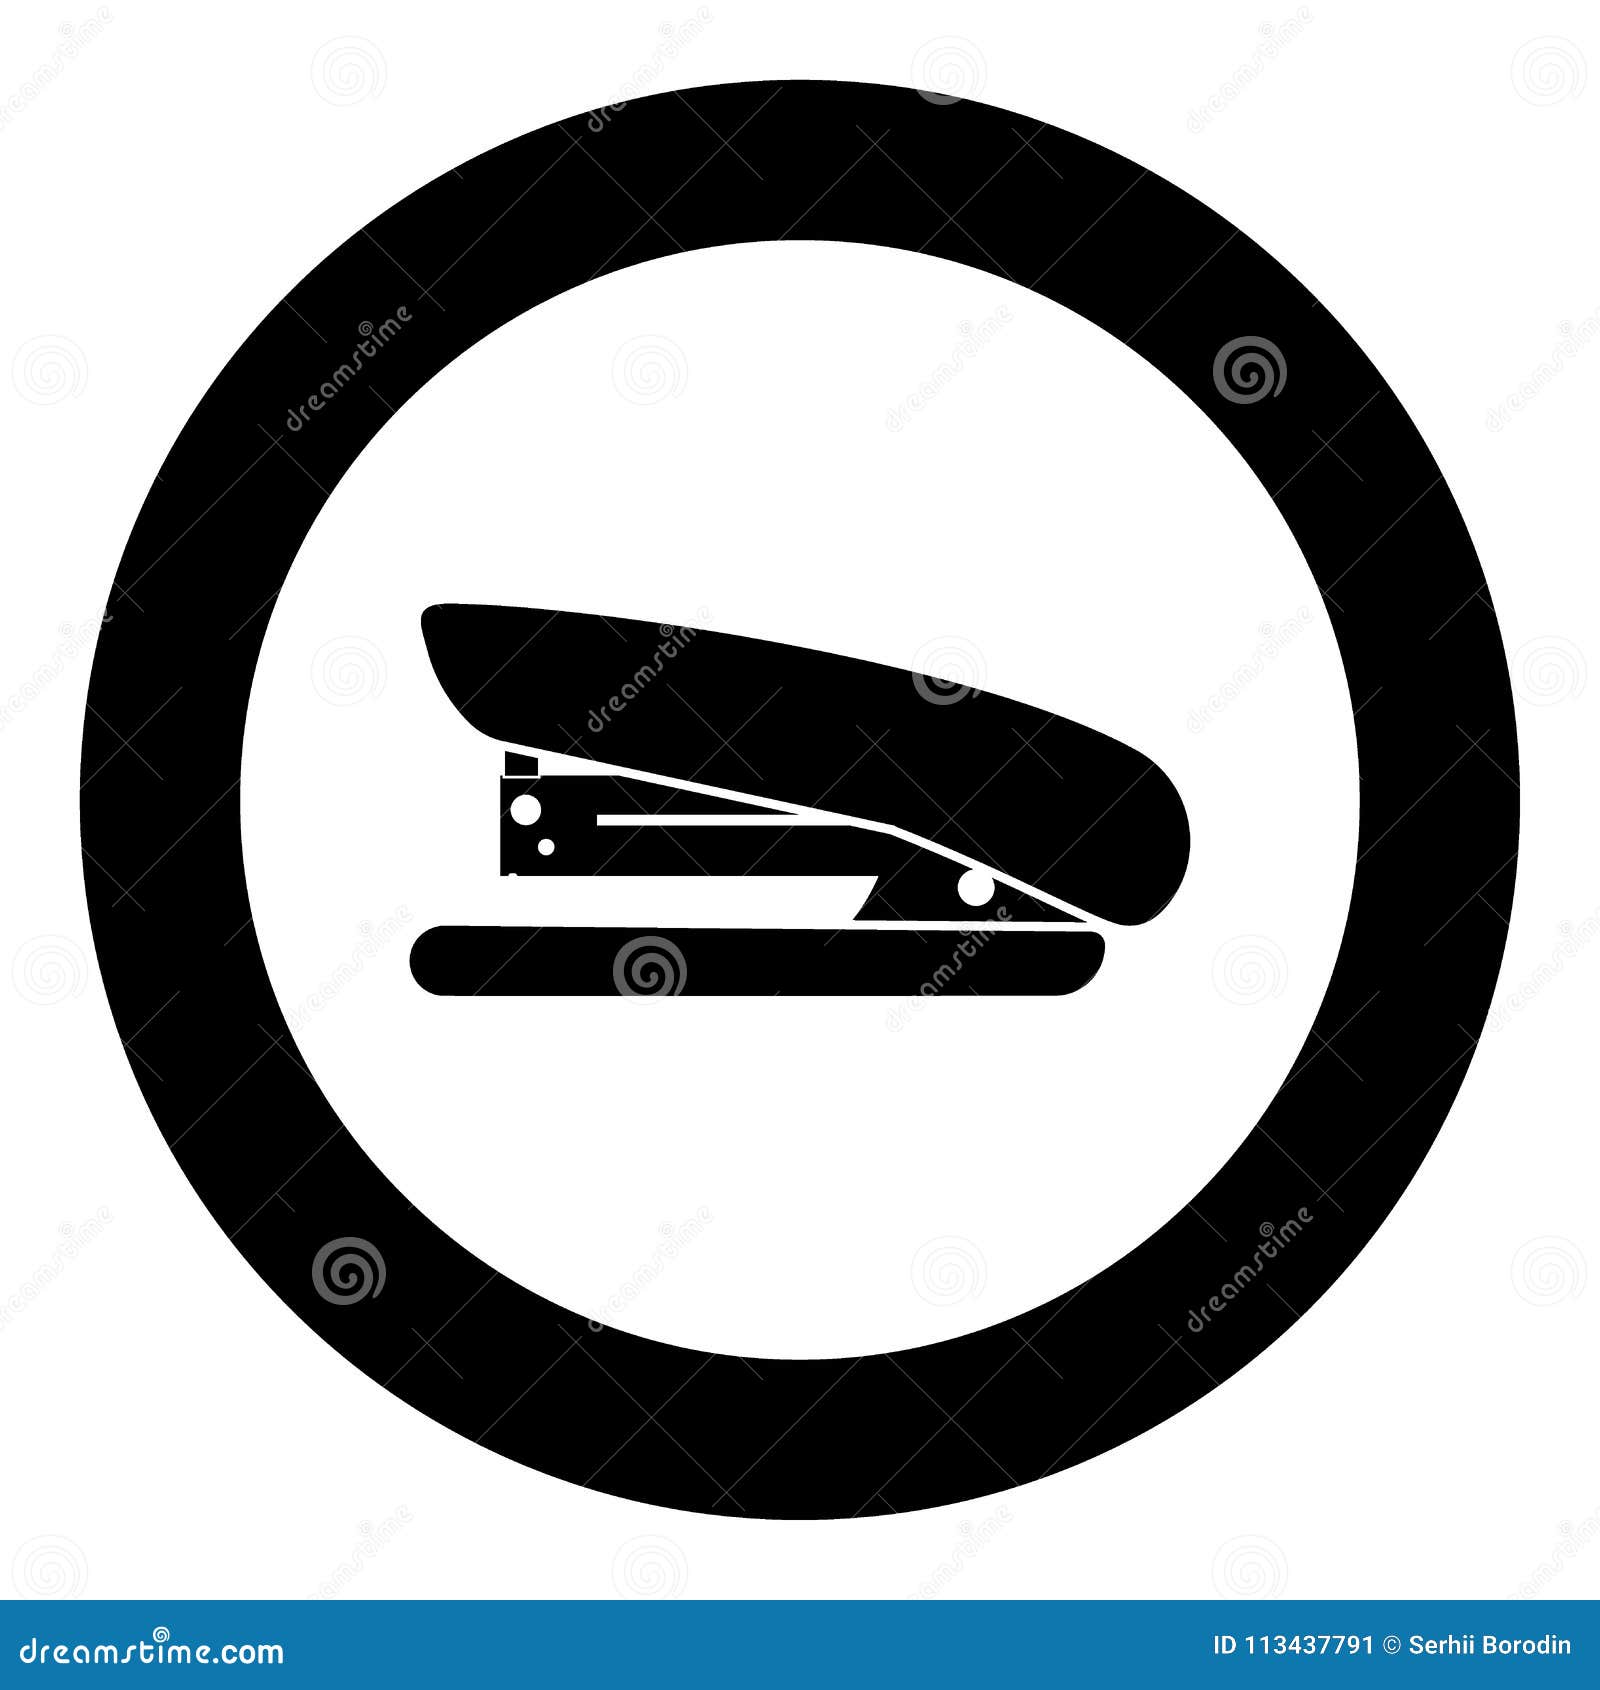 stapler icon black color in circle